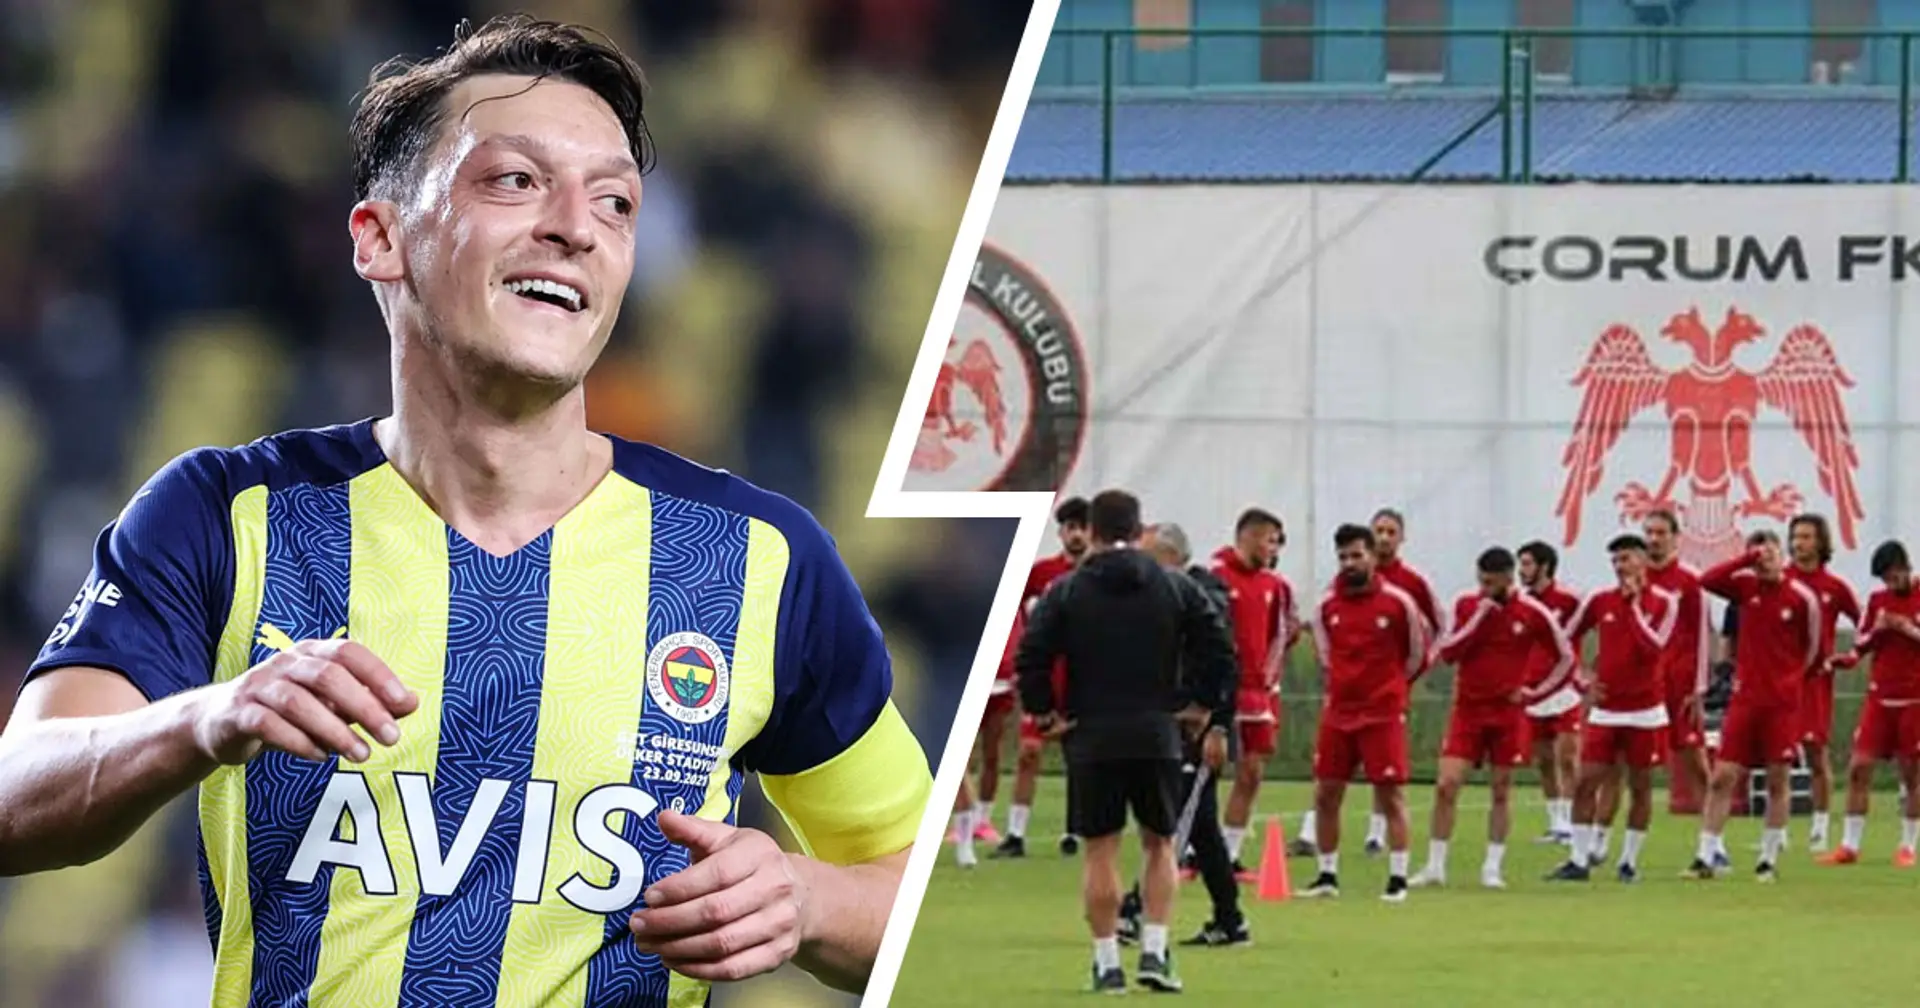 Mesut Ozil 'in advanced talks' to buy Turkey third division club Corum FK for £1m